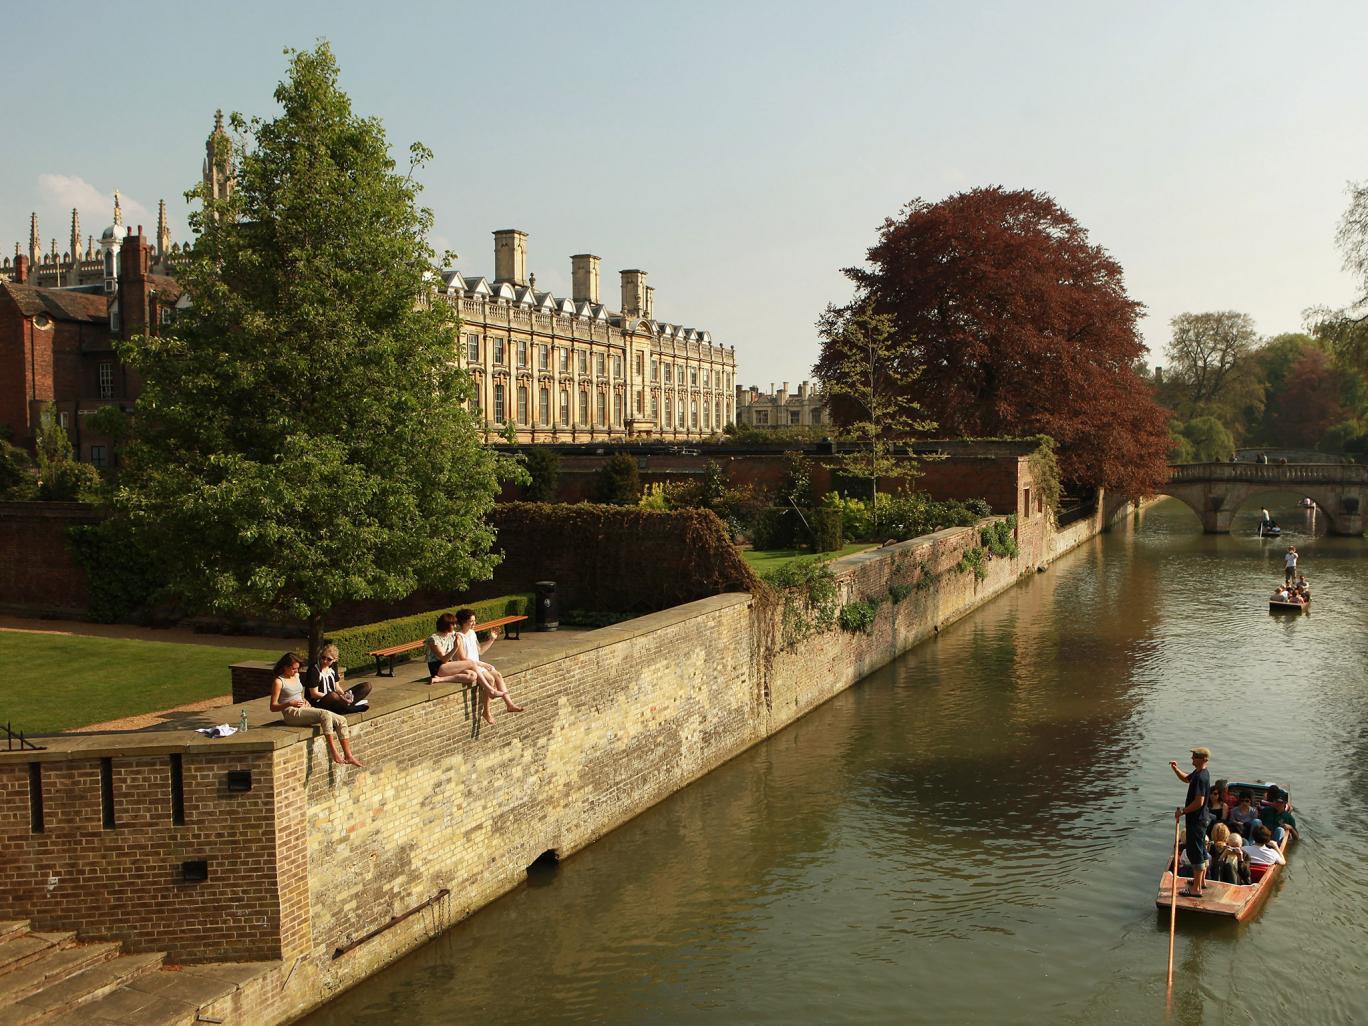 The University of Cambridge, pictured